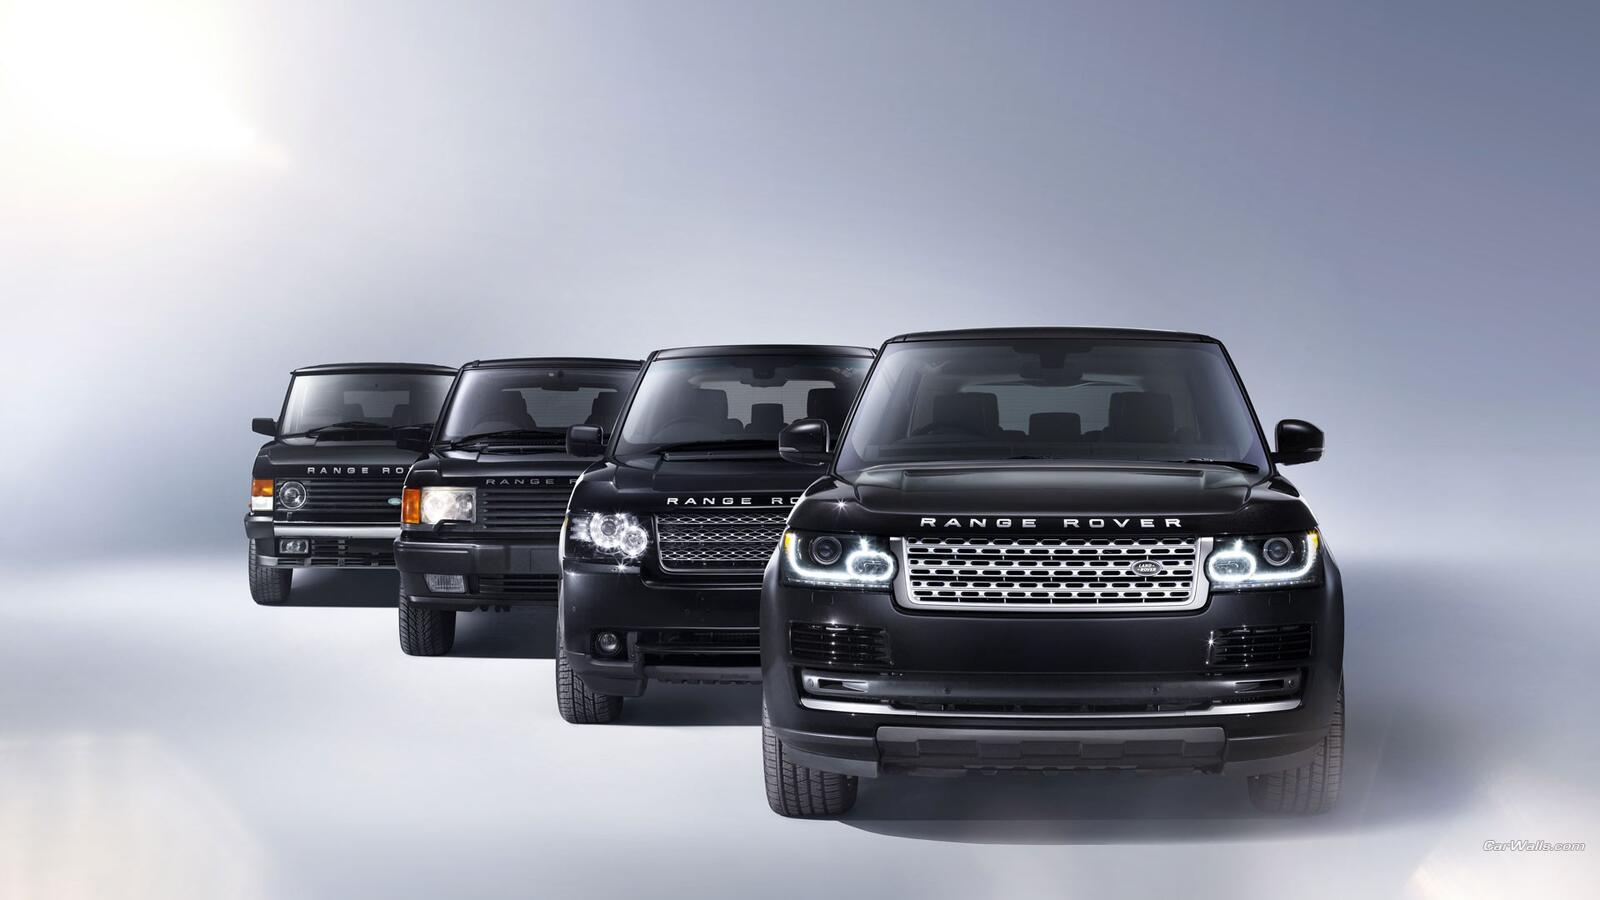 Wallpapers Range Rover generation improvement on the desktop